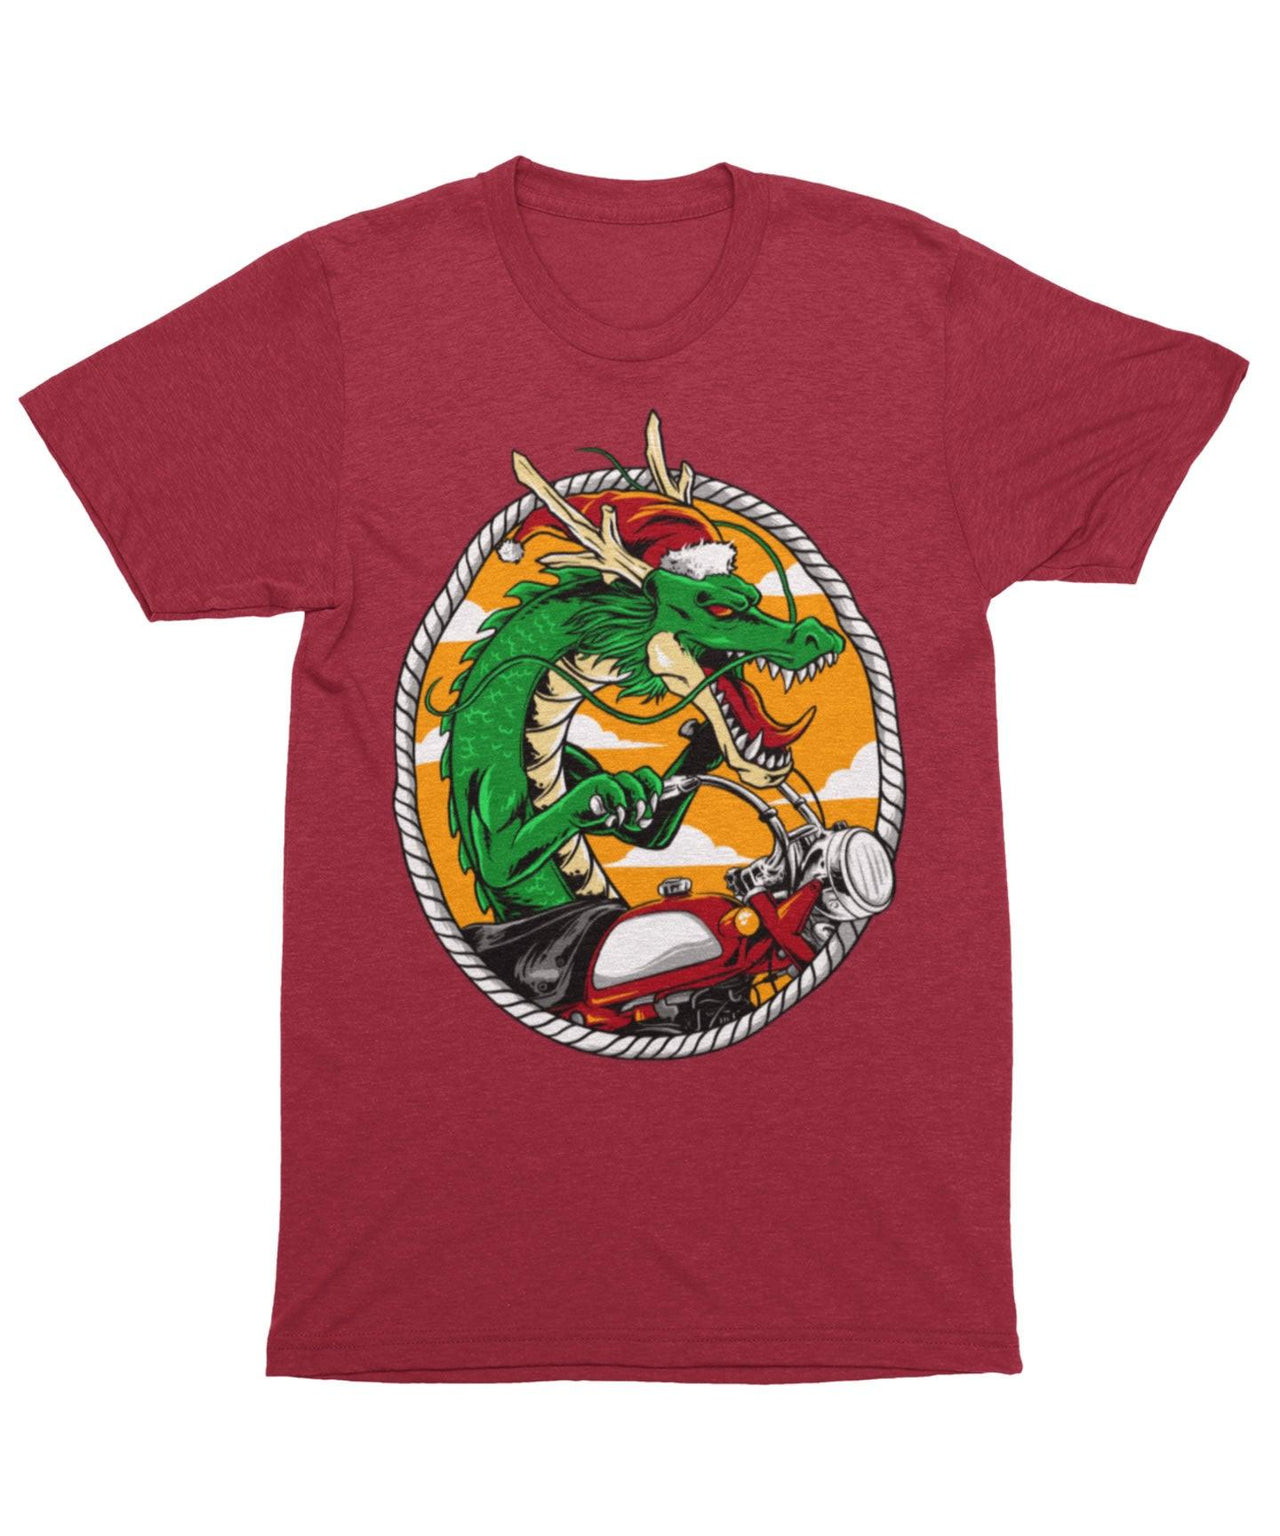 Dragon Rider Santa, Unisex Christmas Mens Graphic T-Shirt 8Ball